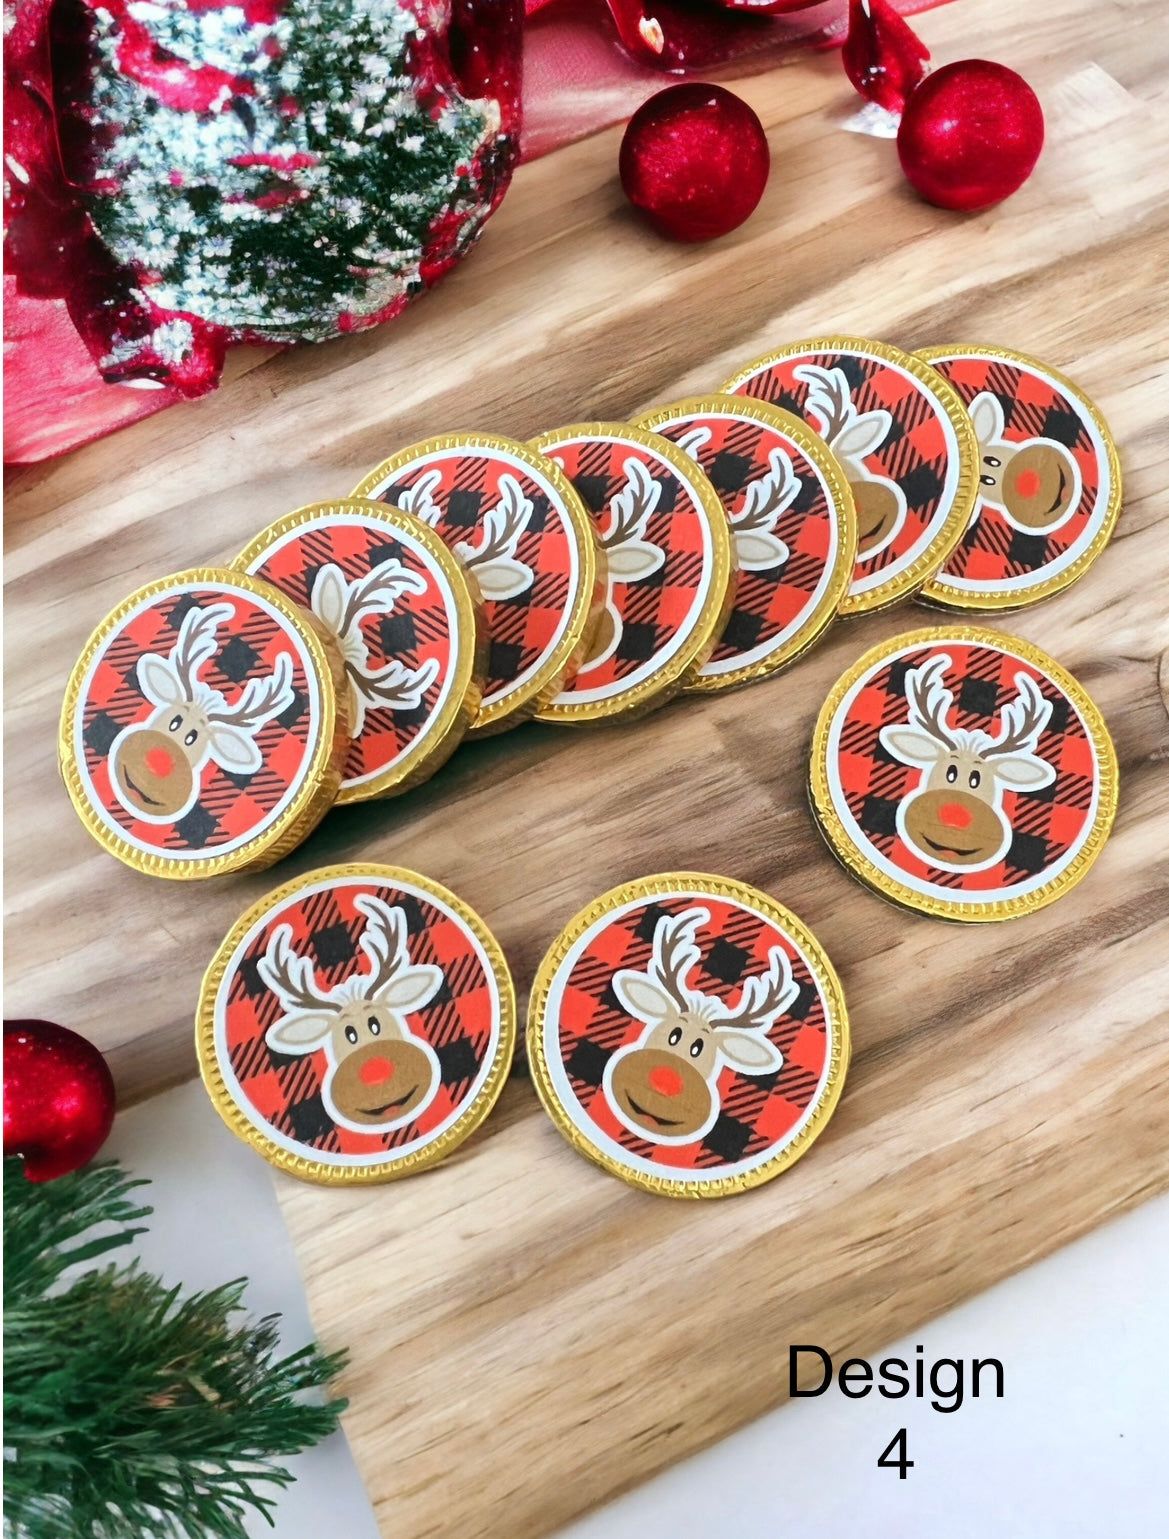 Christmas chocolate coins